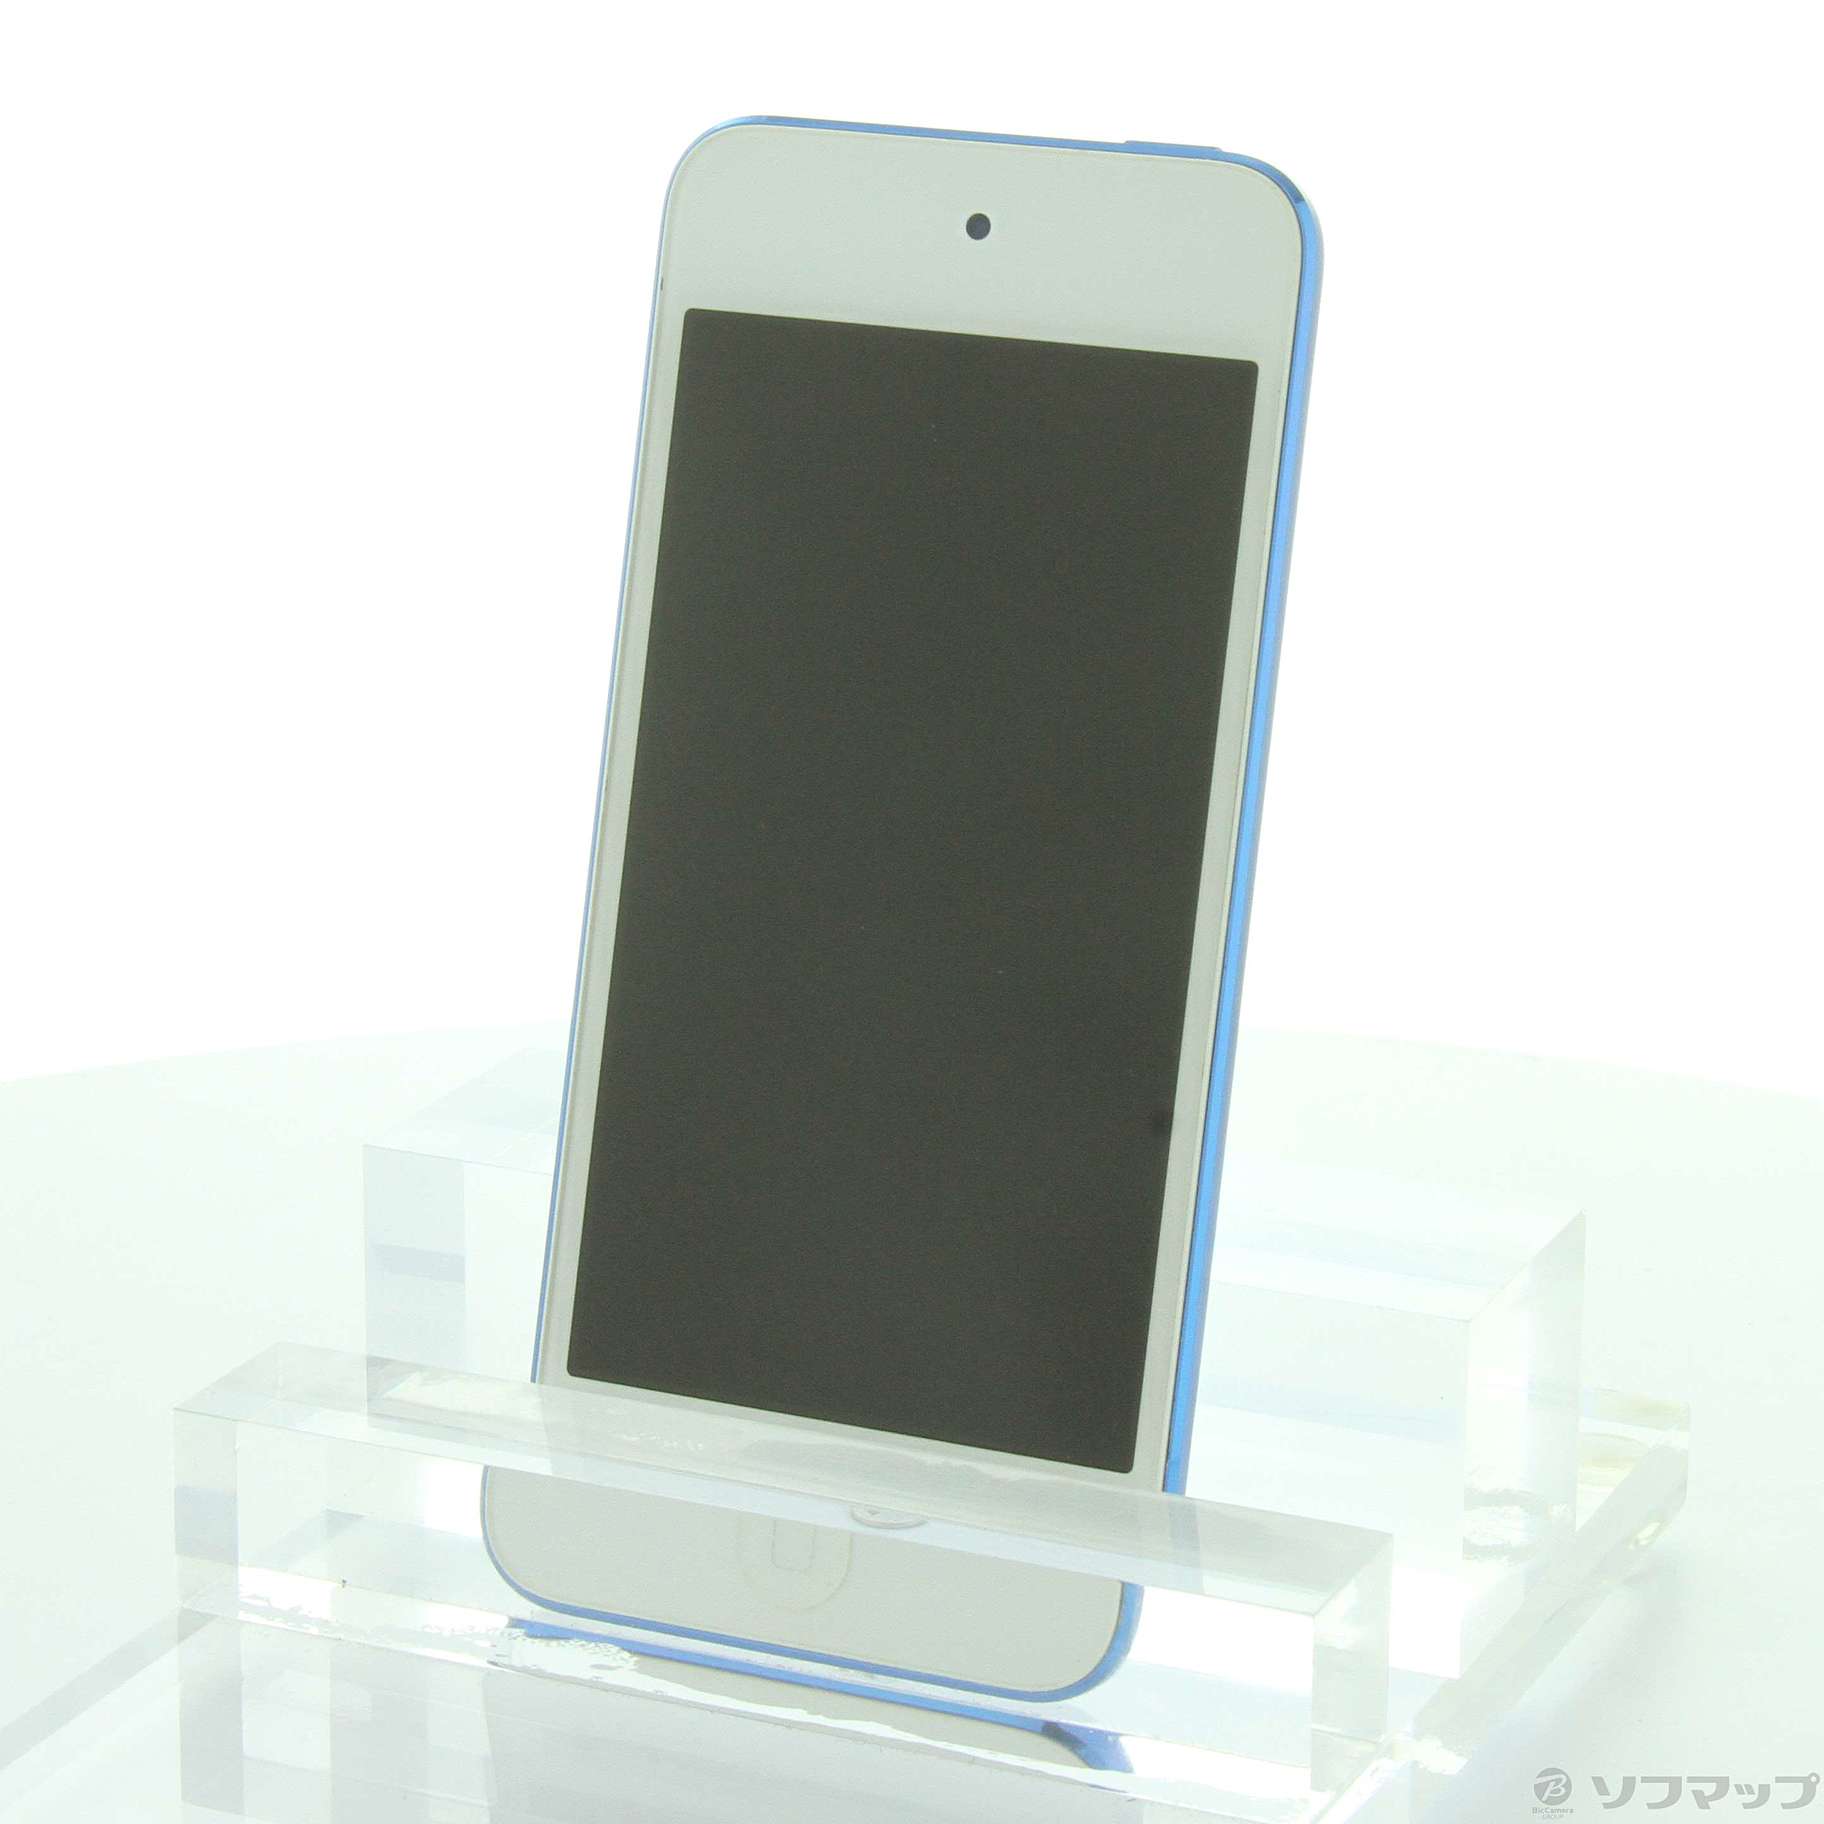 新品・未開封】iPod touch 16GB 第6世代 ブルー - www.sorbillomenu.com